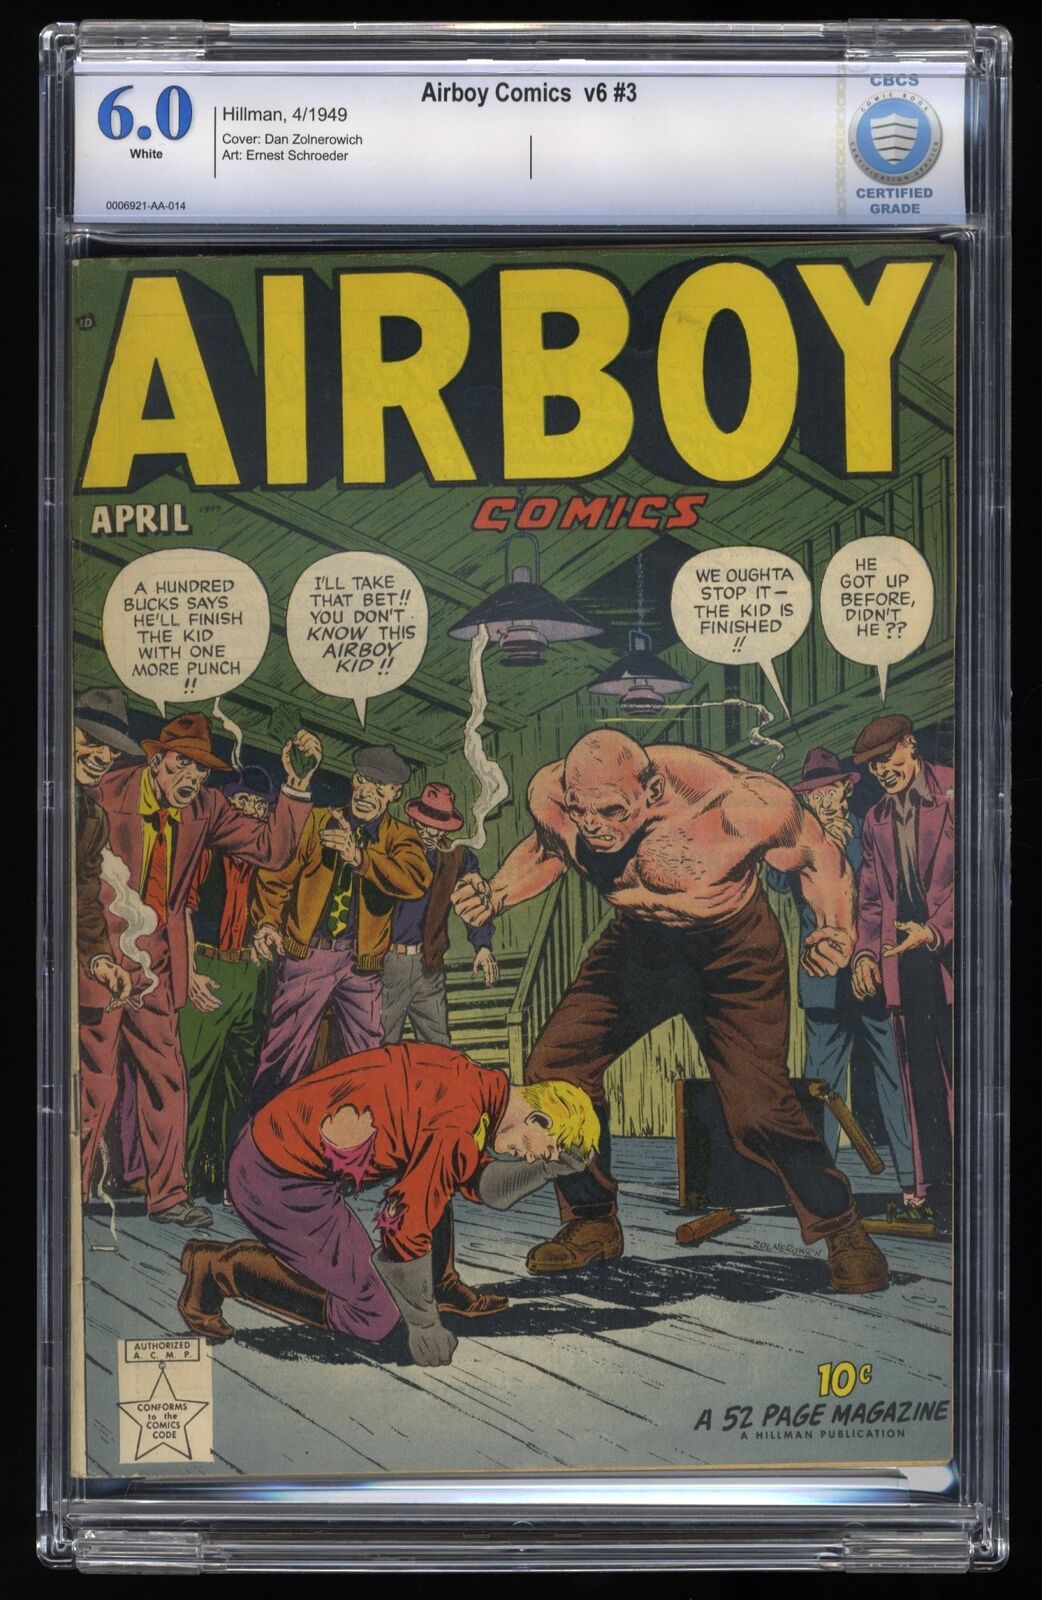 Airboy Comics v6 #3 CBCS FN 6.0 White Pages Hillman 1949